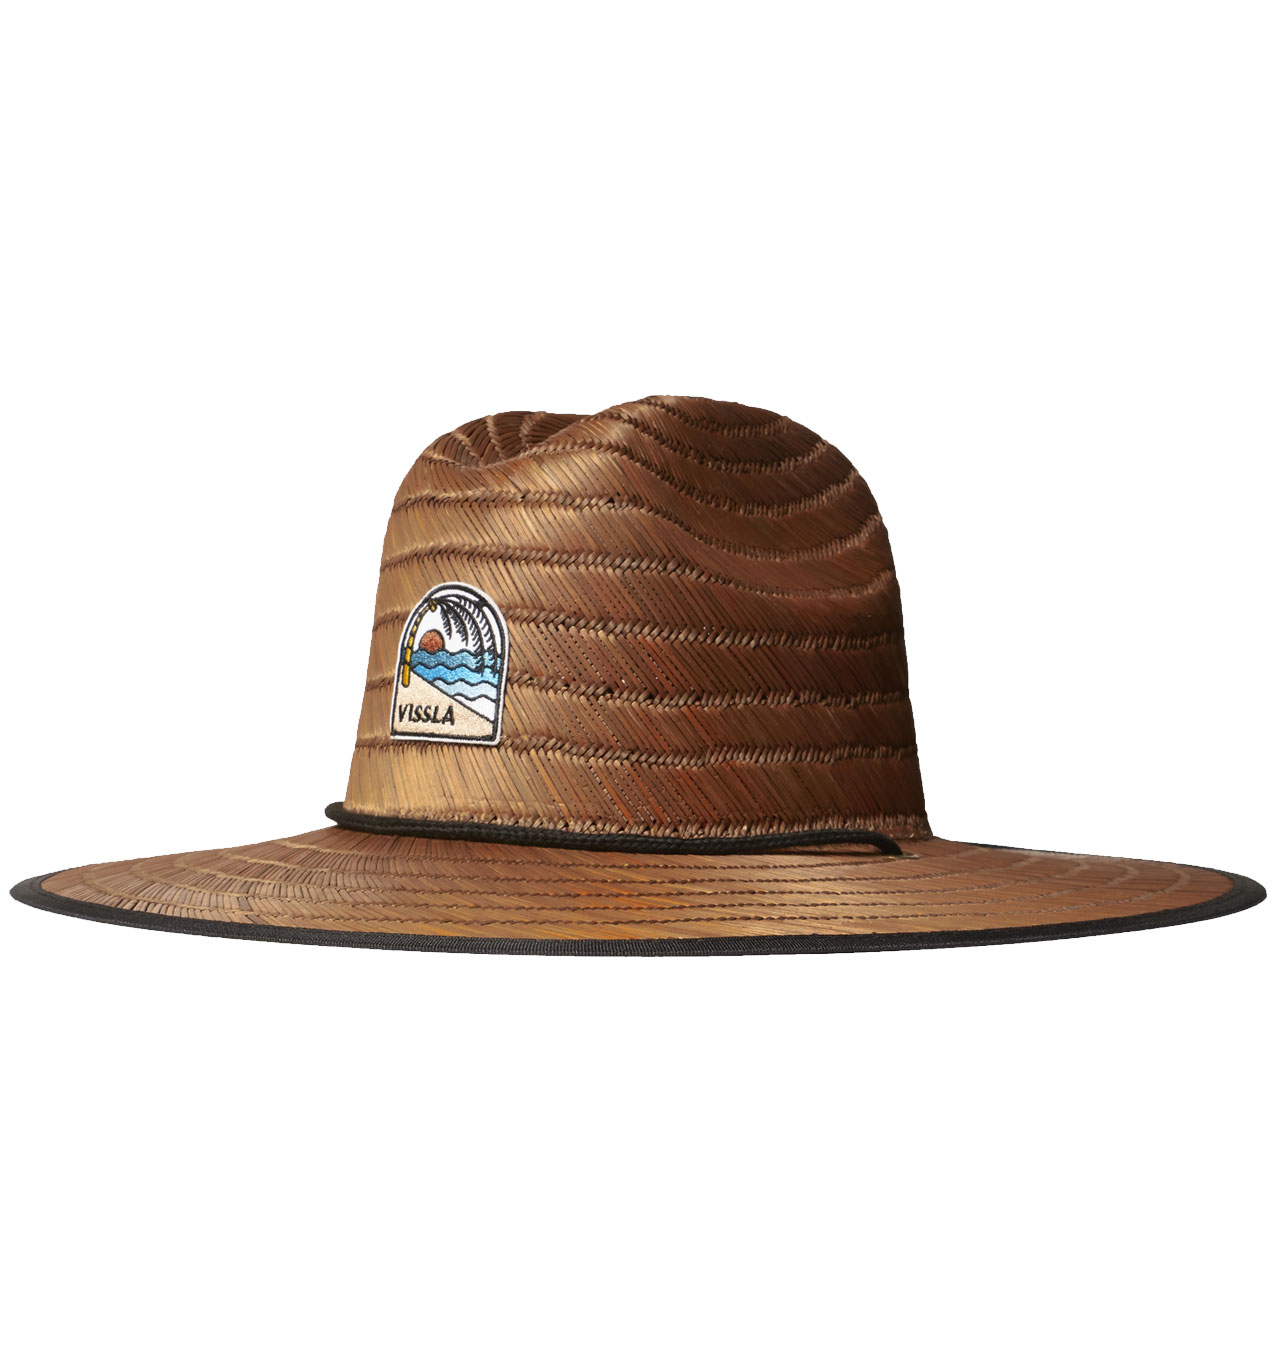 Vissla - Outside Sets Lifeguard Hat - Brown